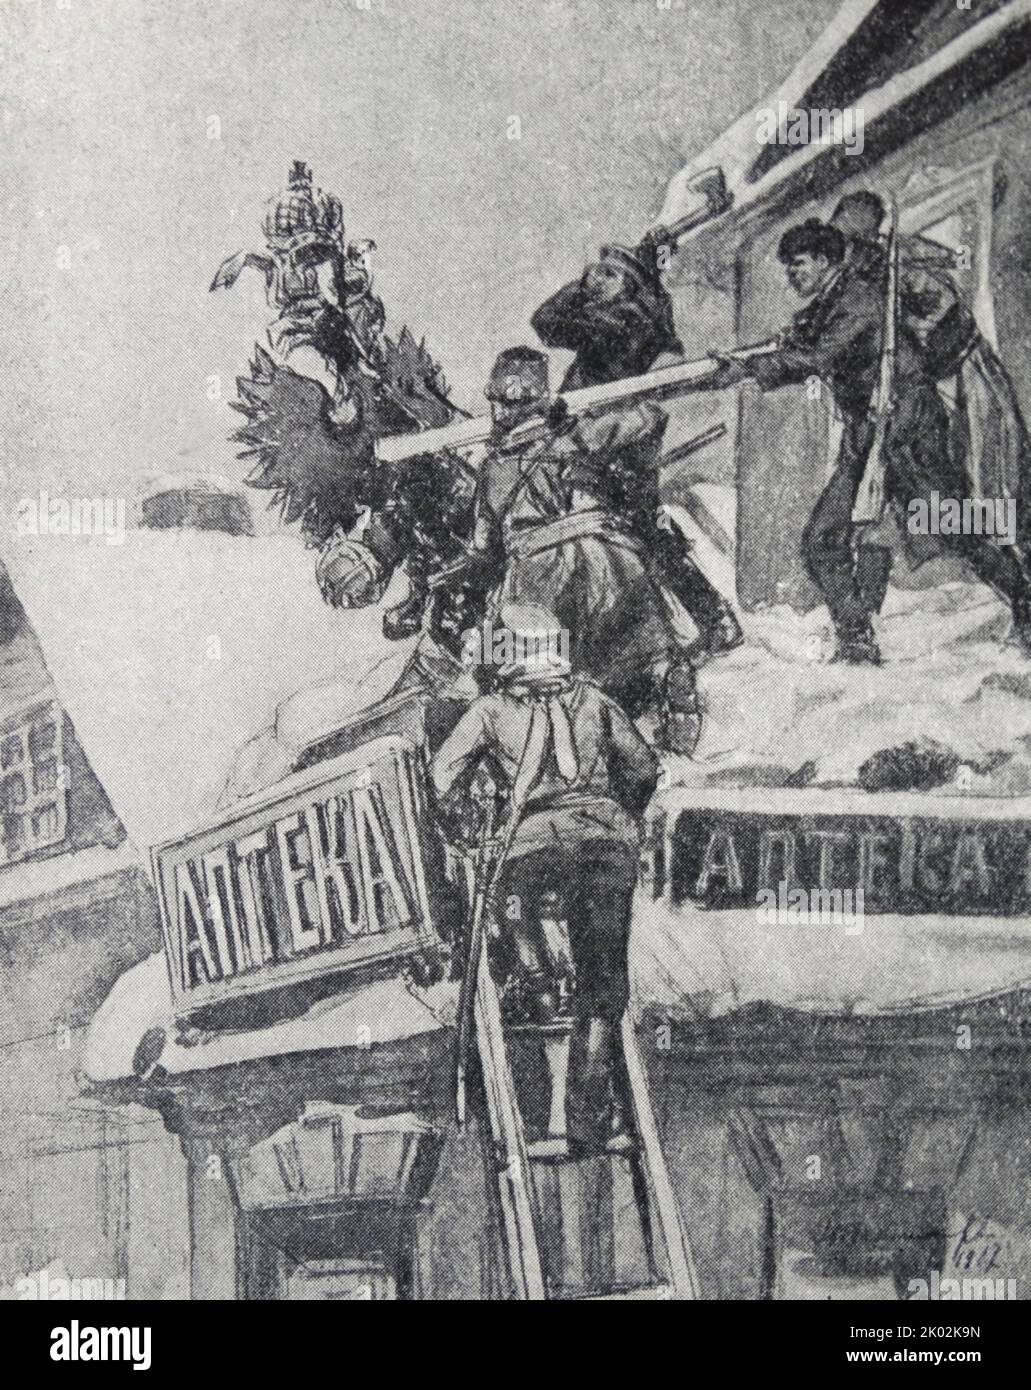 Destruction of royal emblems. By I. Vladimirova. 1917 October Revolution in Russia Stock Photo